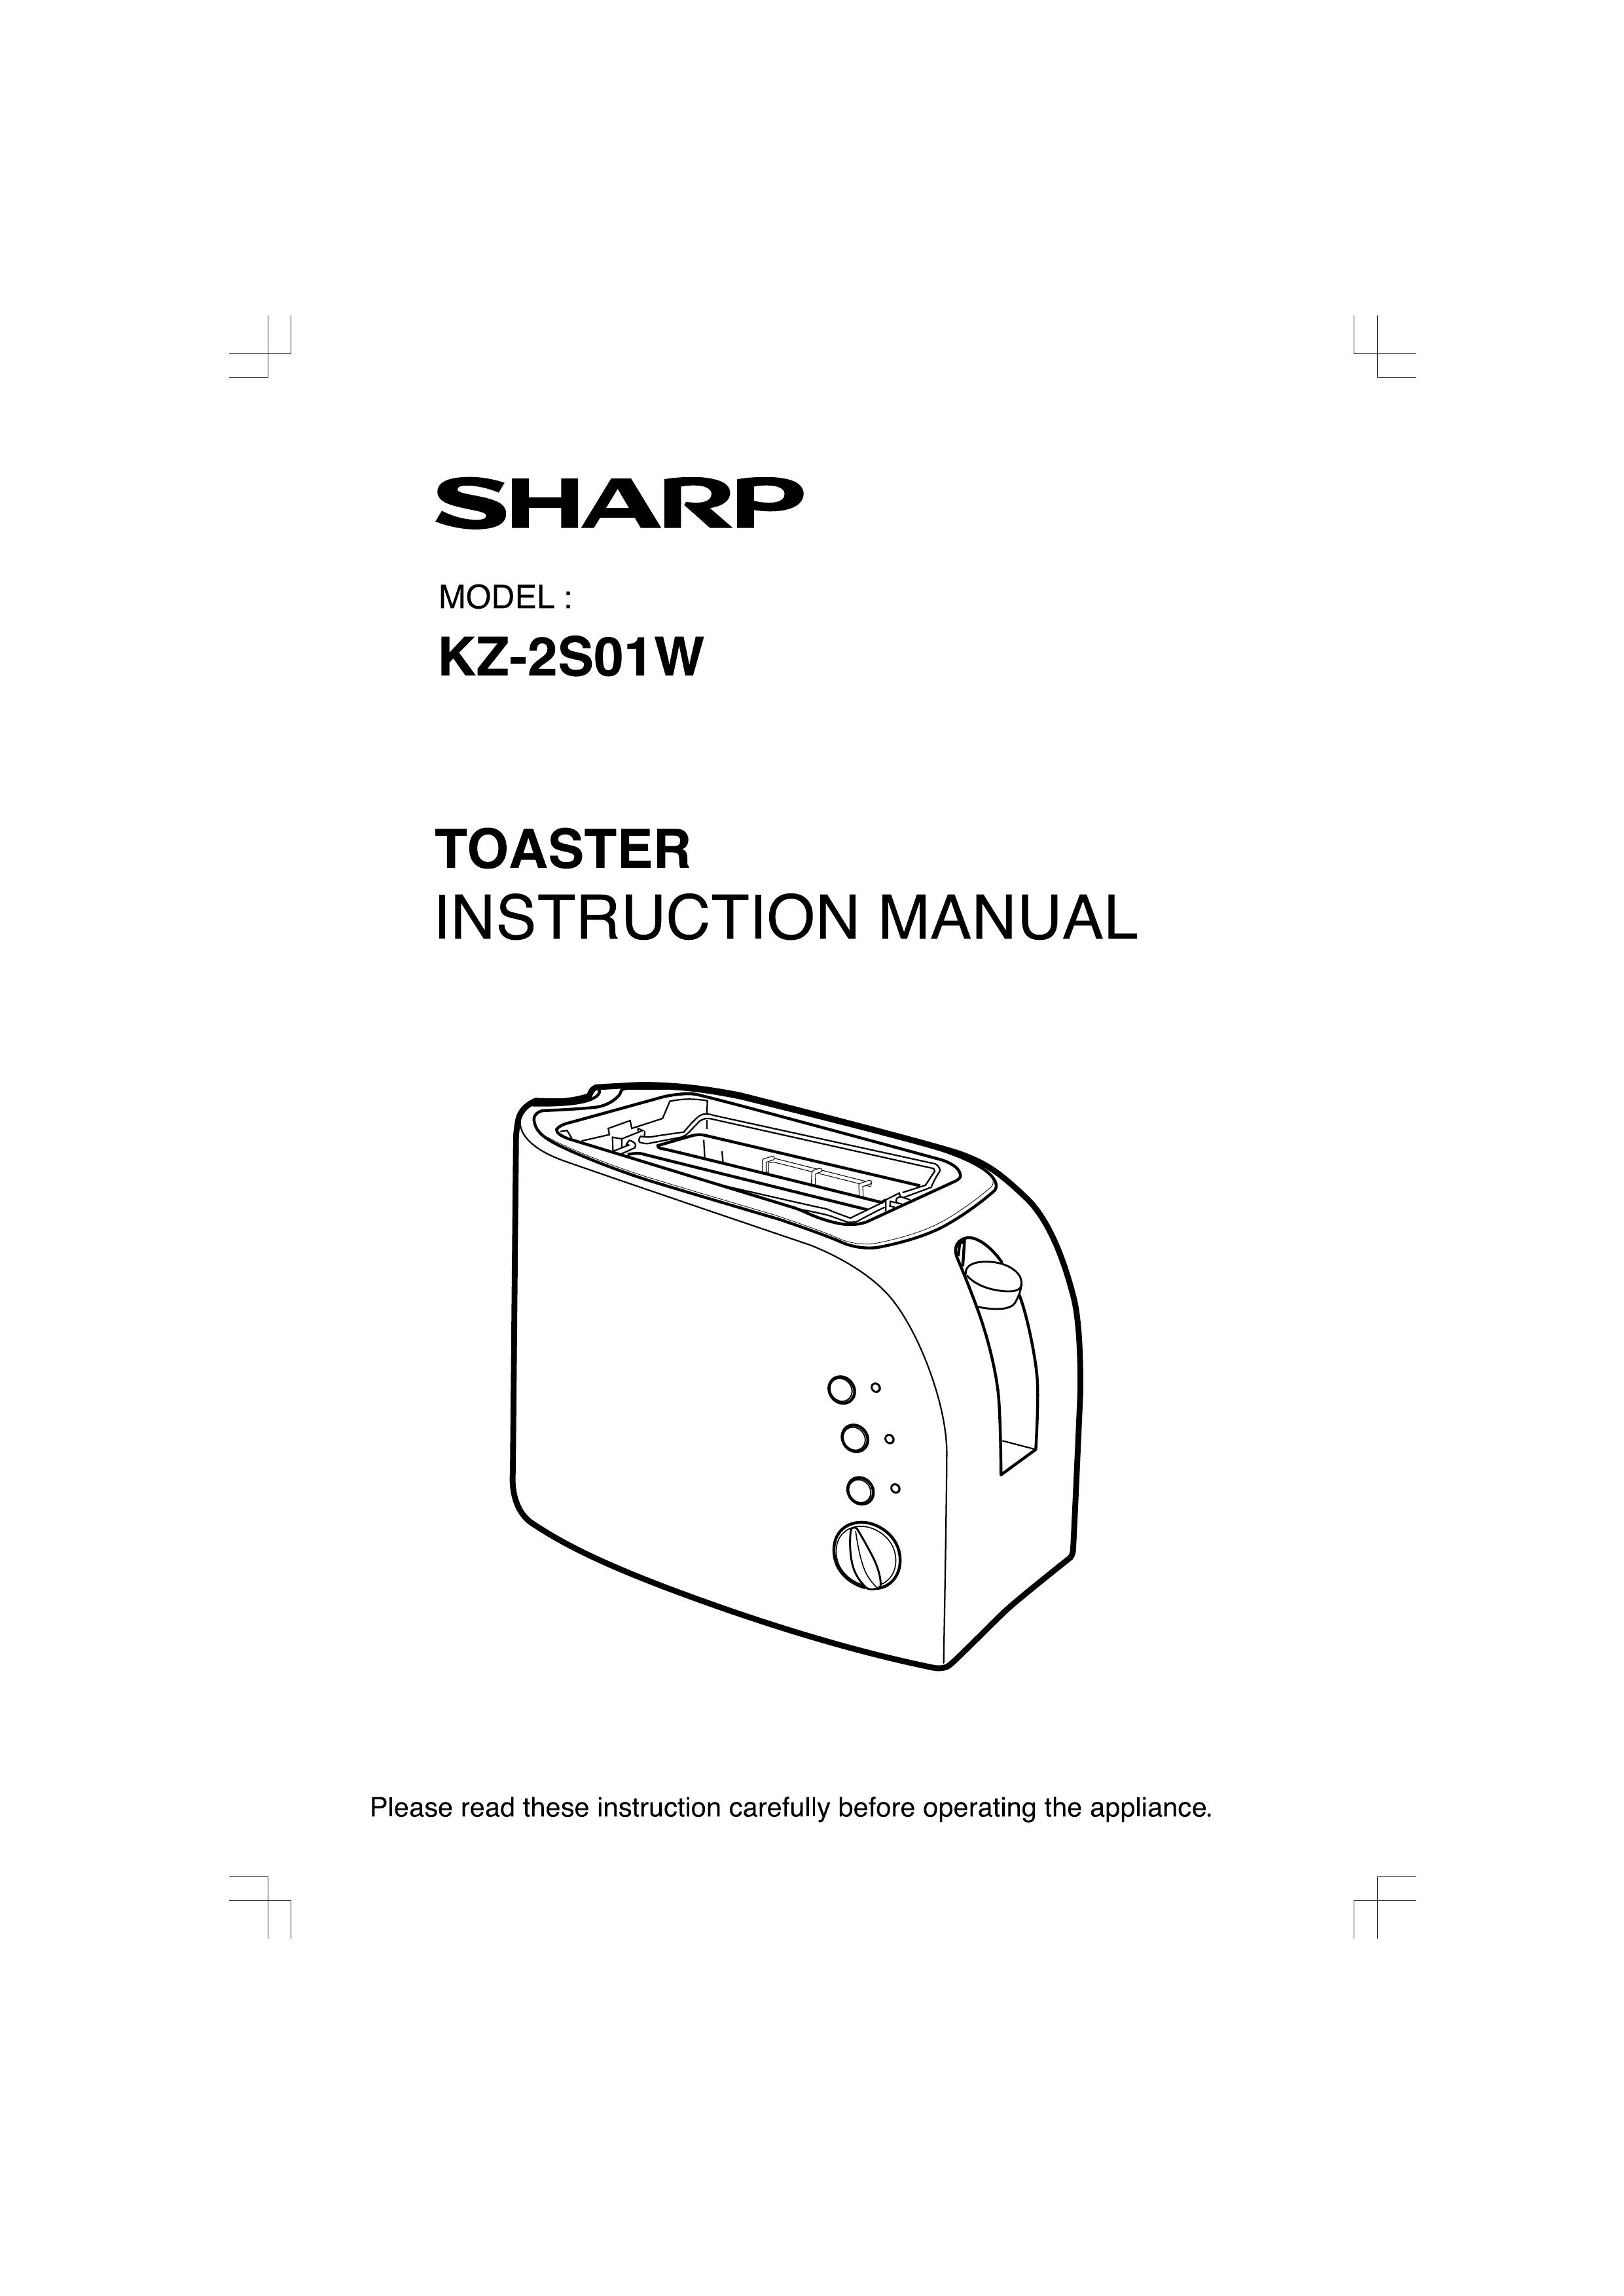 Sharp KZ-2S01W Toaster User Manual